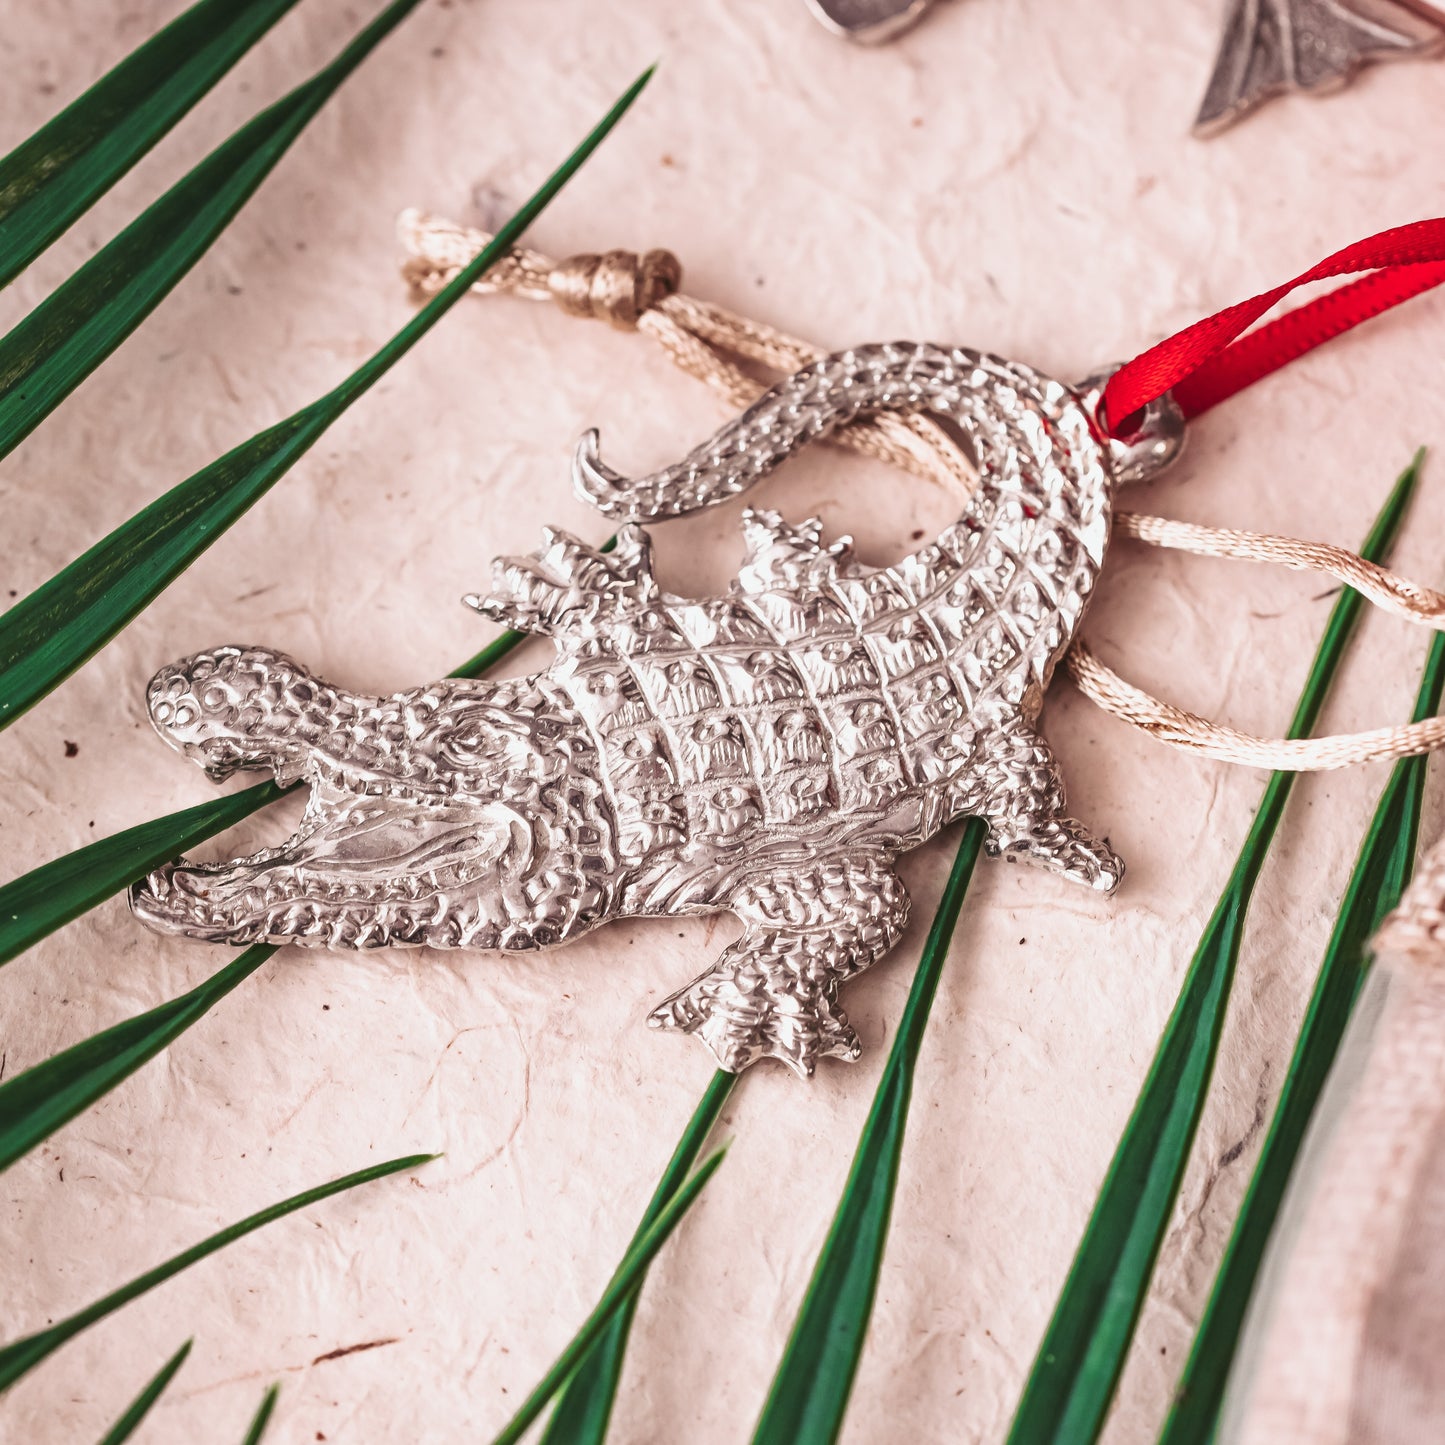 Louisiana Christmas Ornament - LO State Symbols - Alligator - Pelican - Magnolia - Individual Ornament or Gift Set